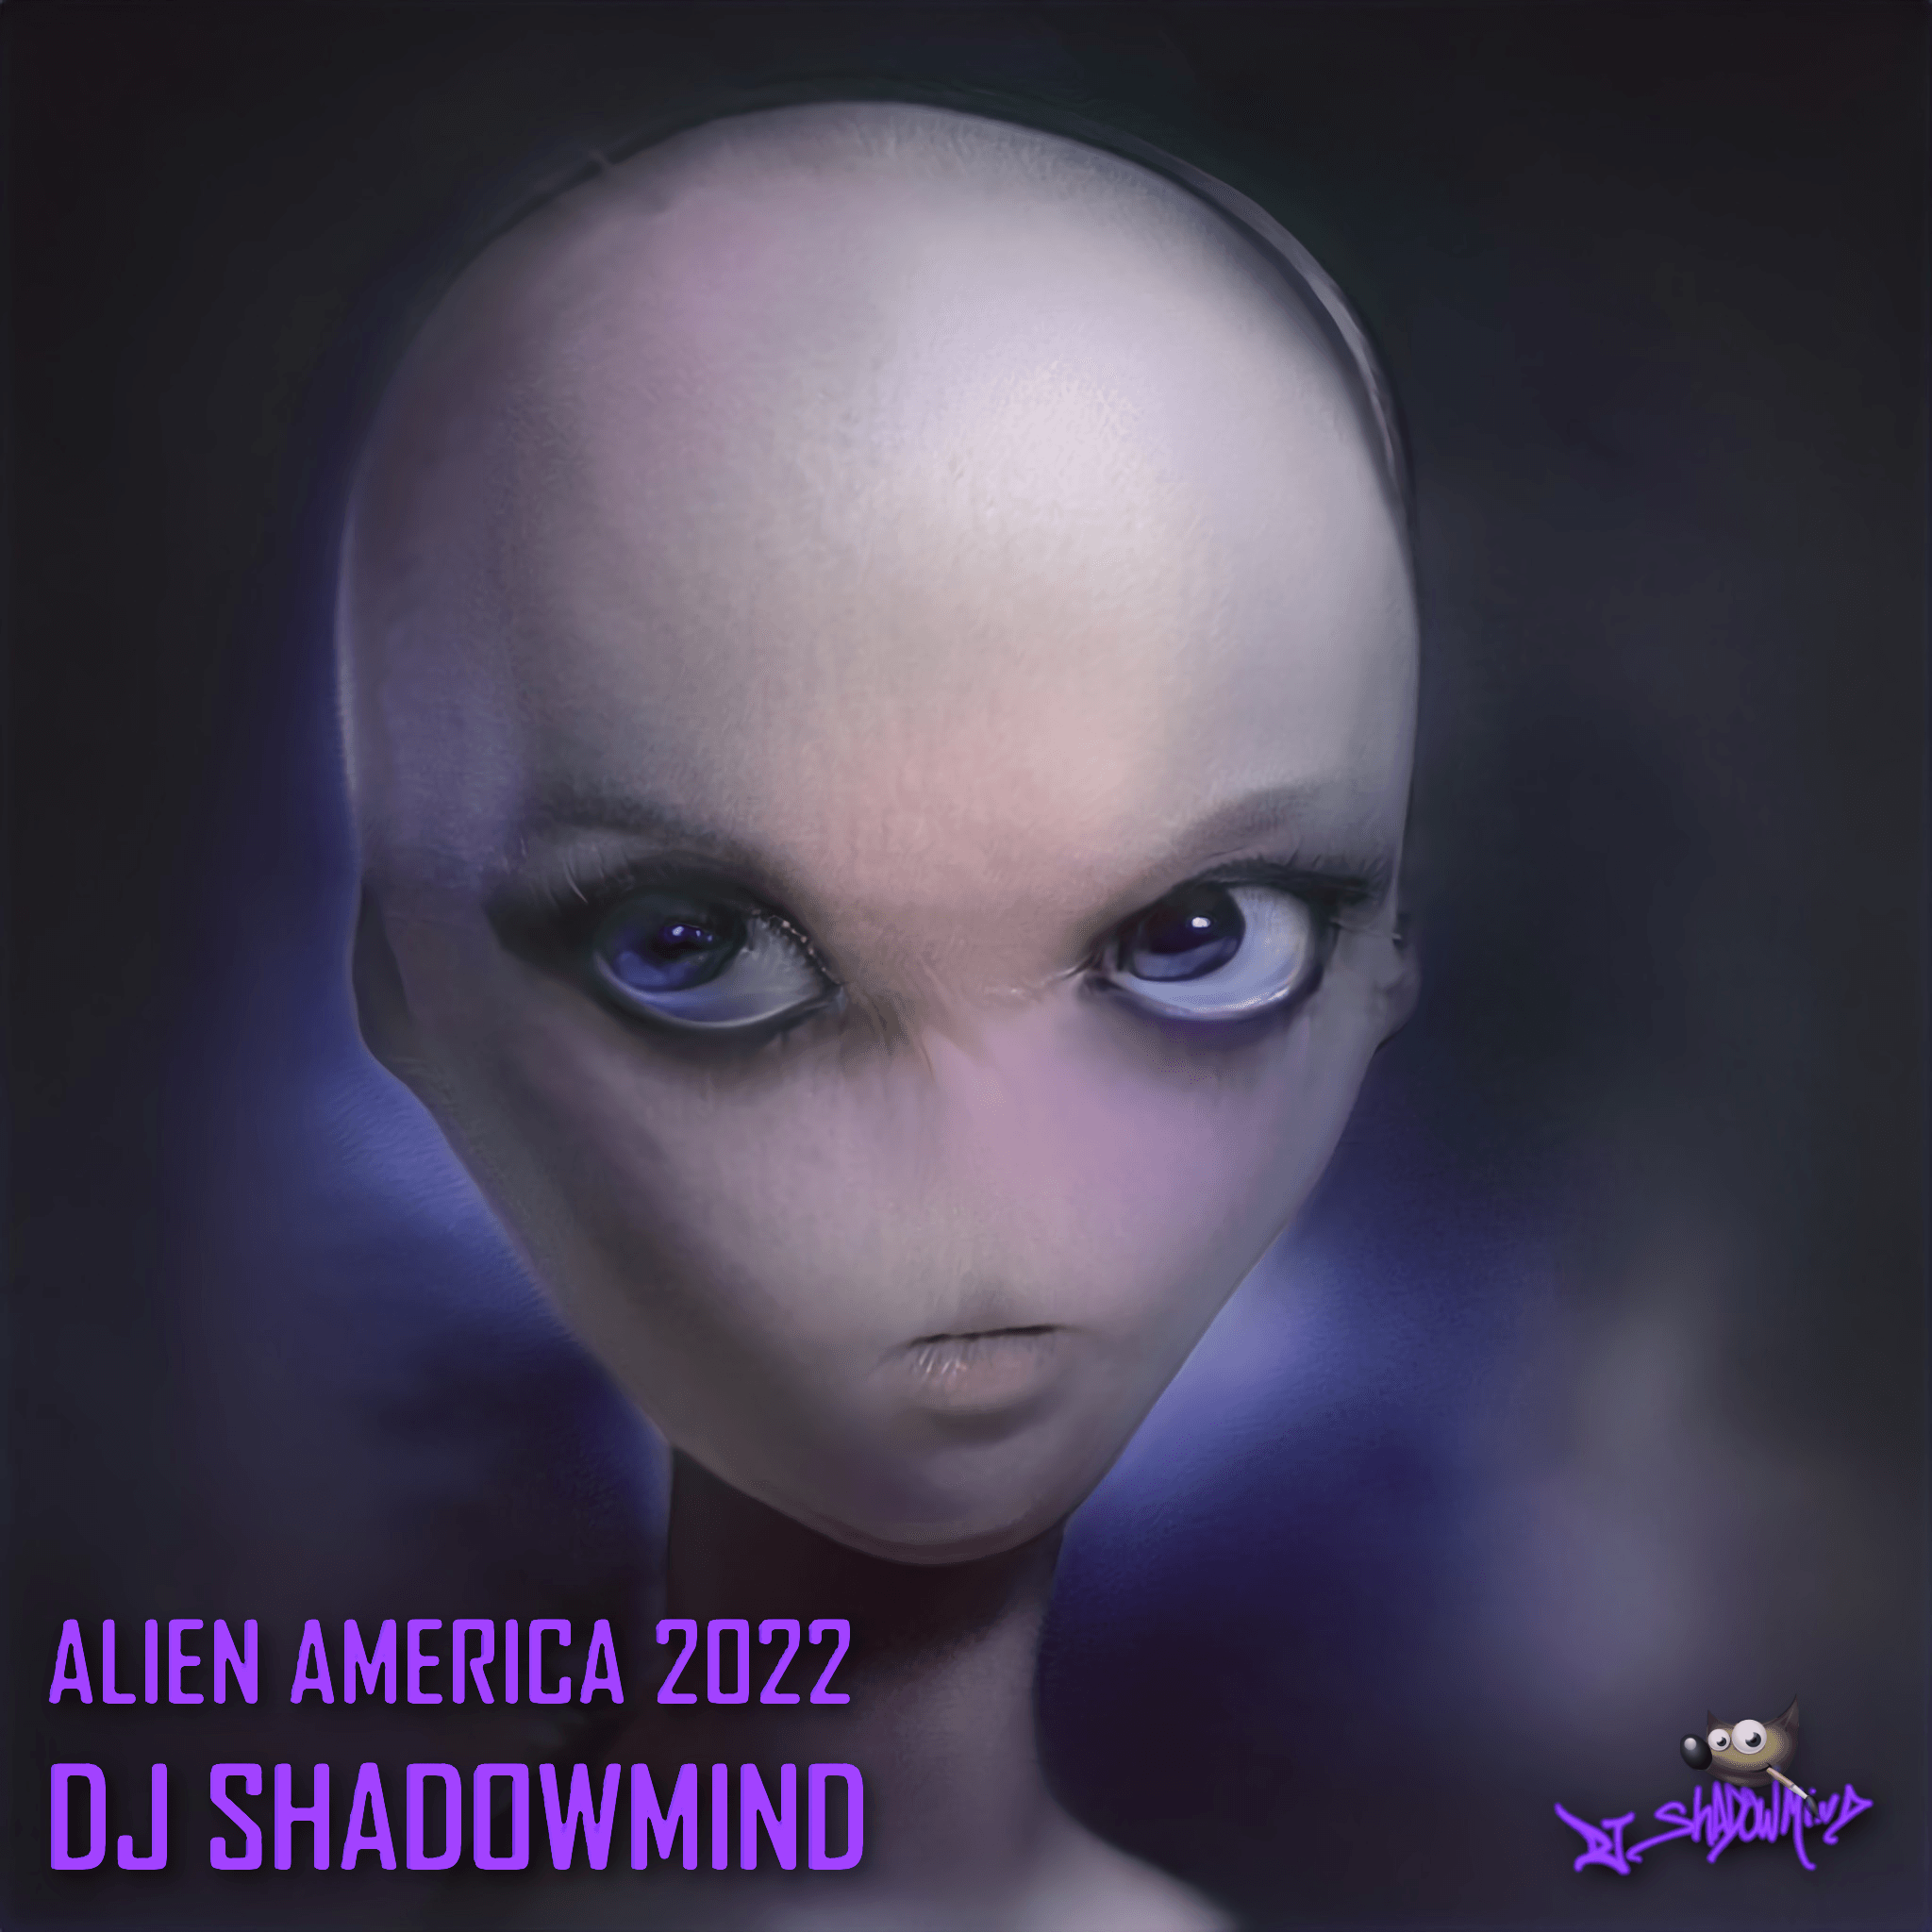 Alien America 2022 - Agent 078